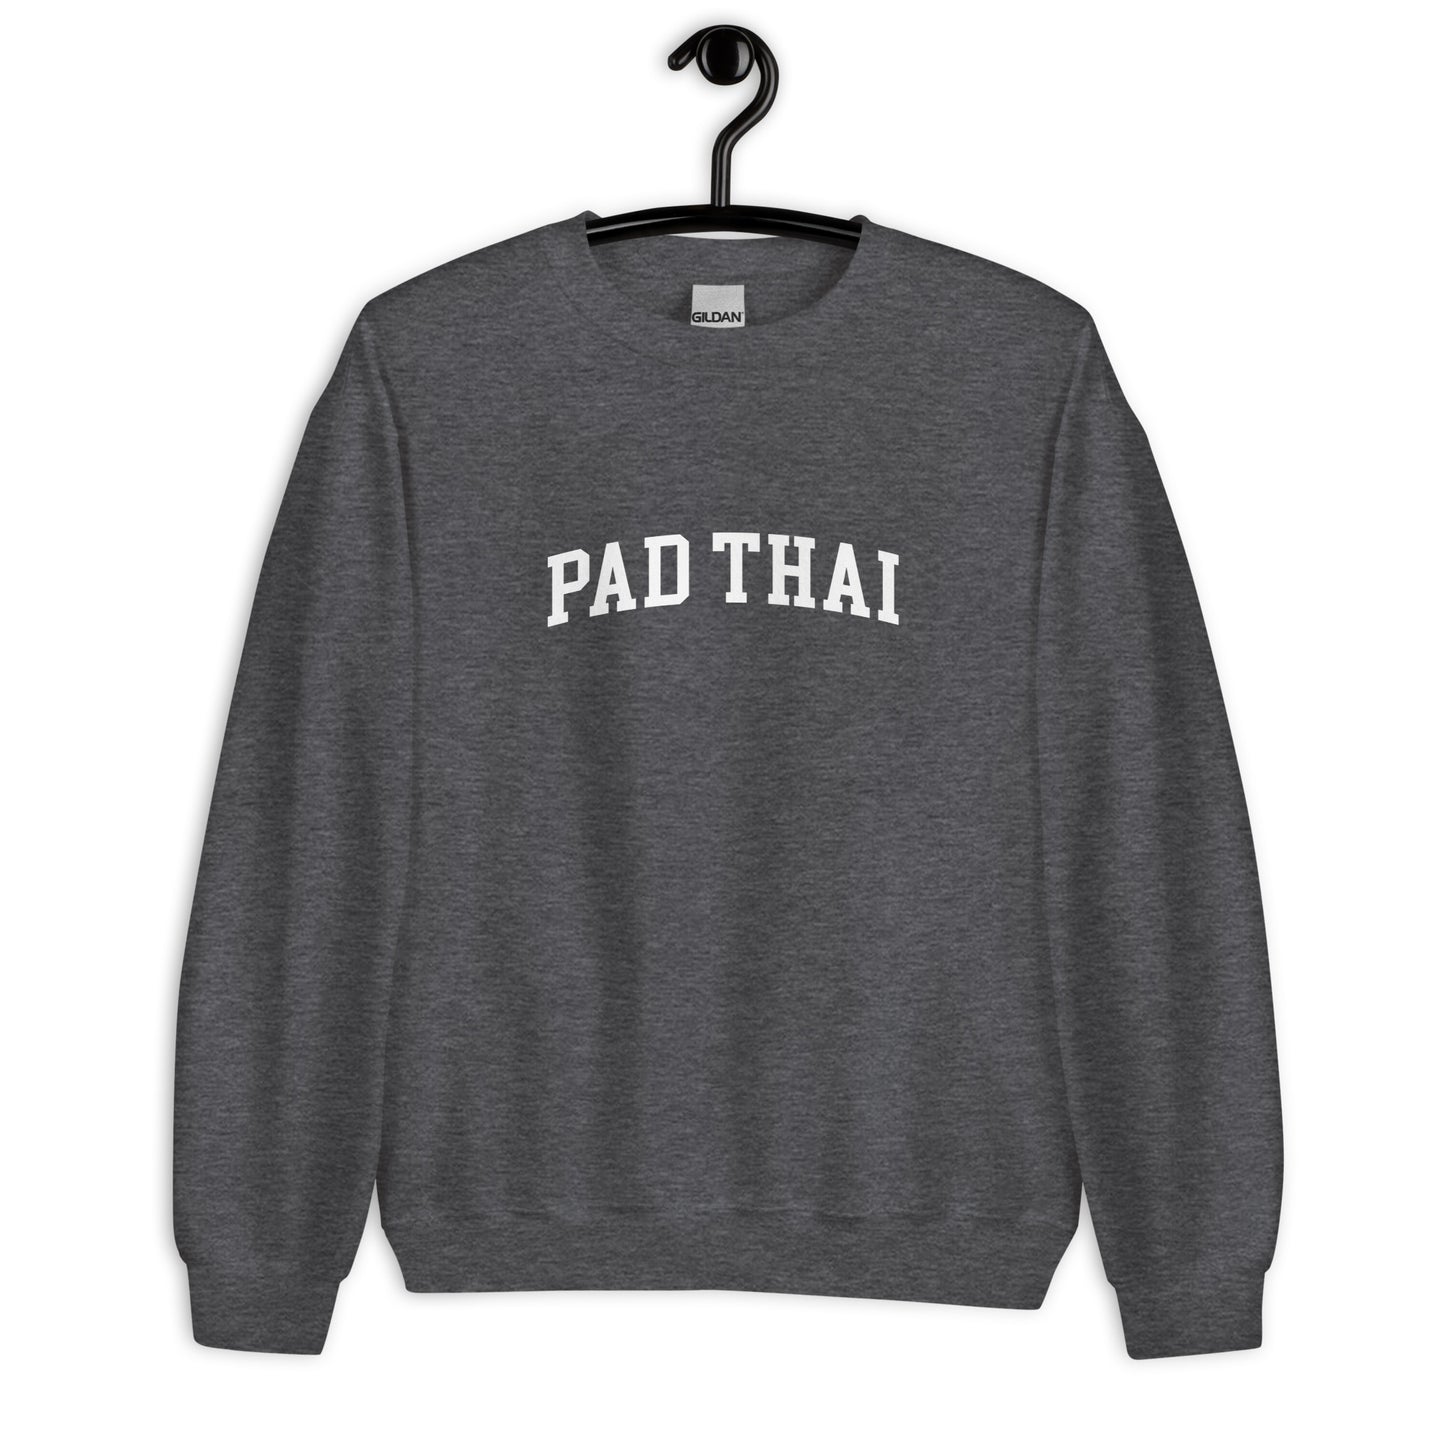 Pad Thai Sweatshirt - Arched Font